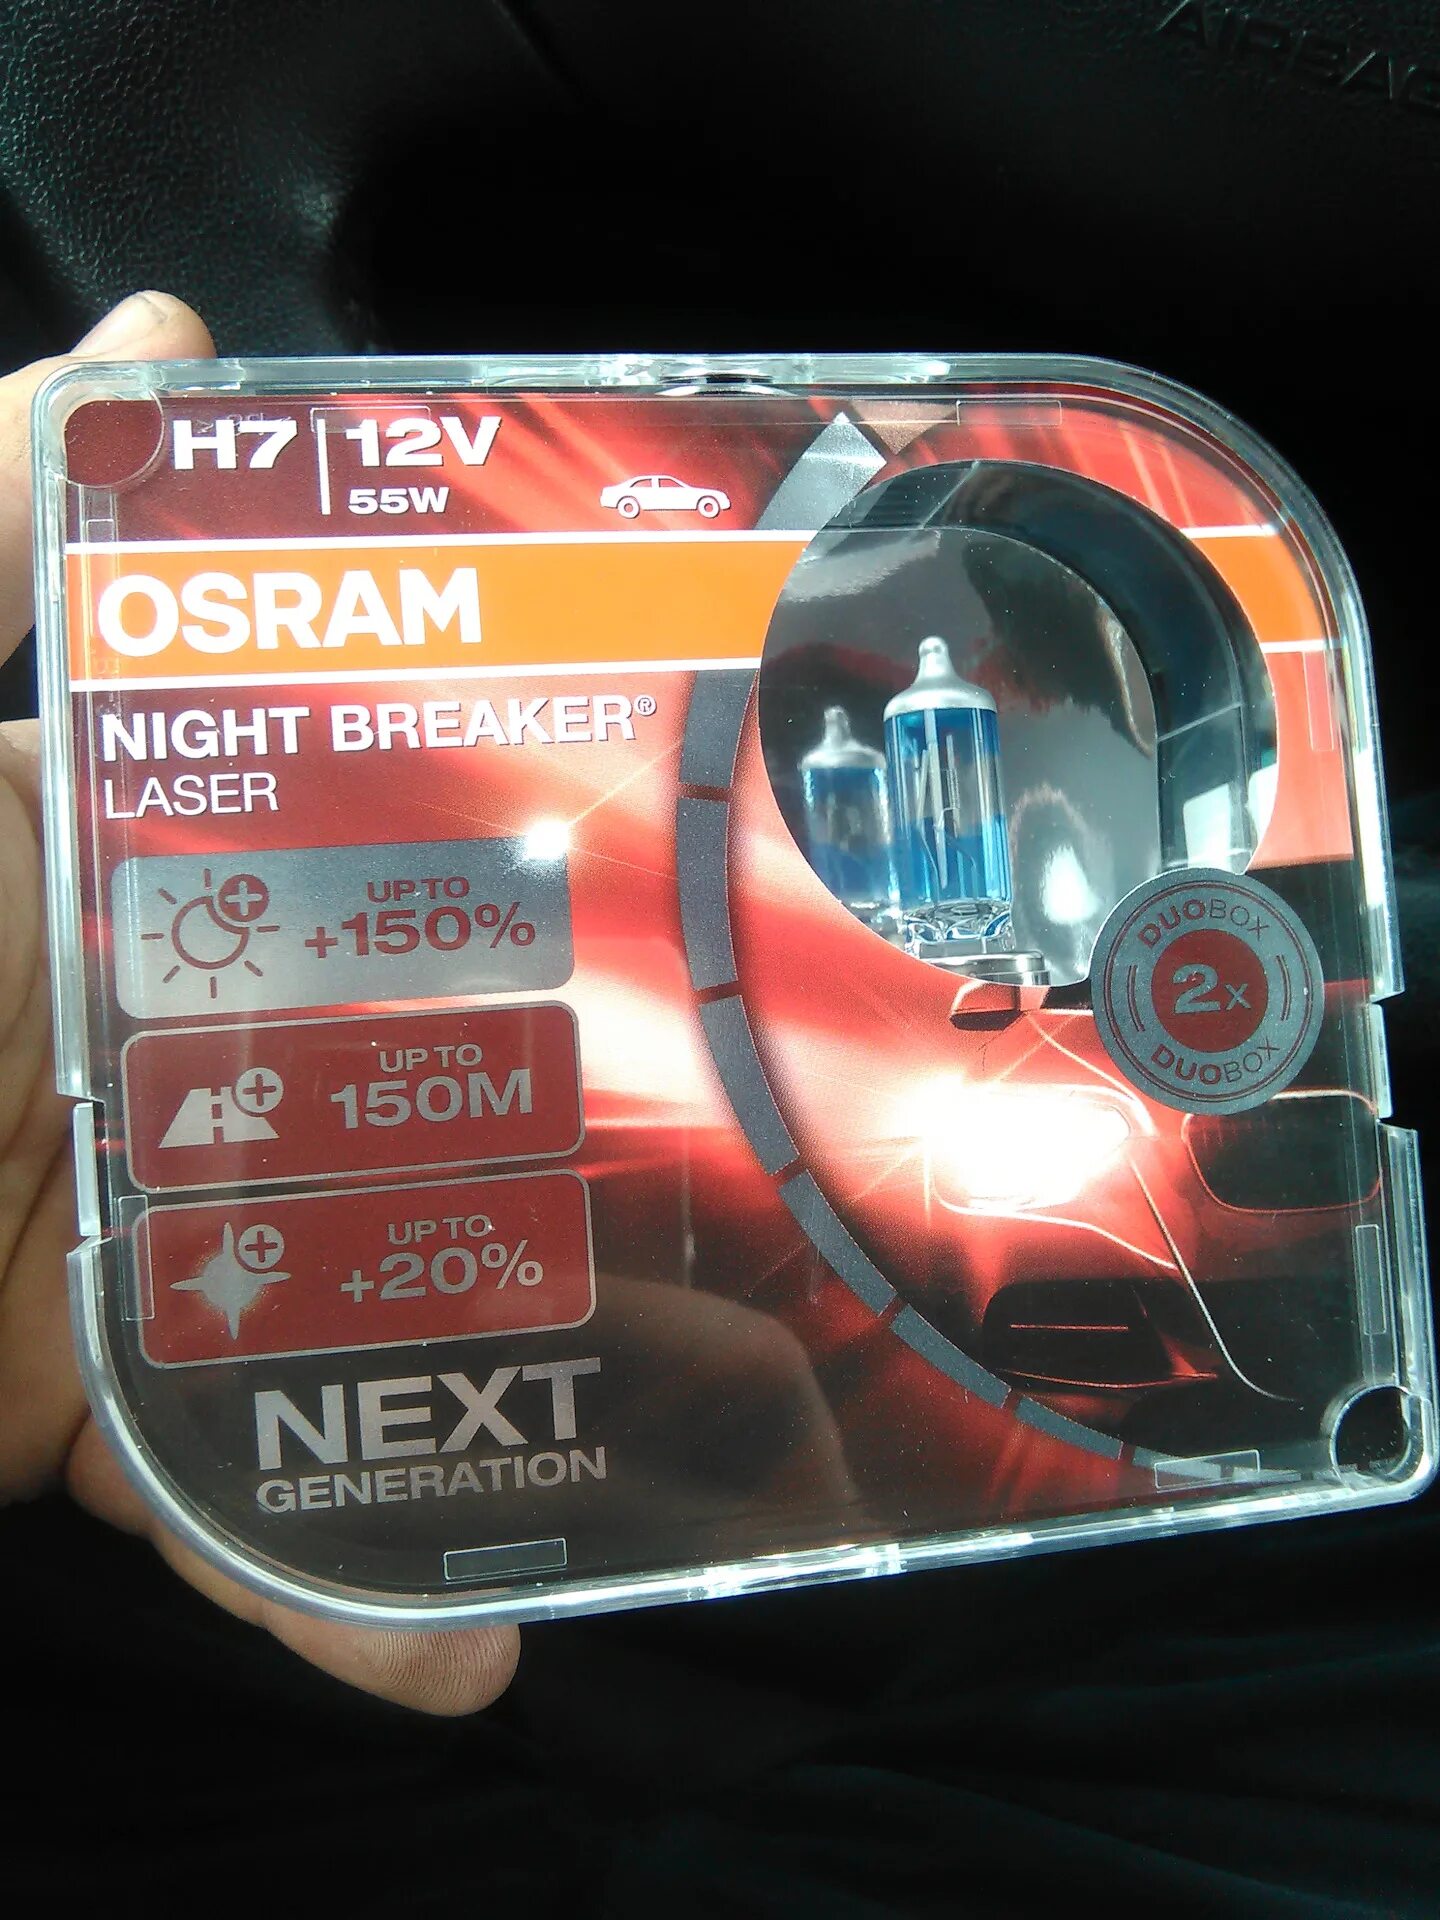 Осрам Найт брекер 150 лазер. Осрам h7 Night Breaker. Osram h7 Night Breaker Laser +150. Osram Night Breaker Laser h7.